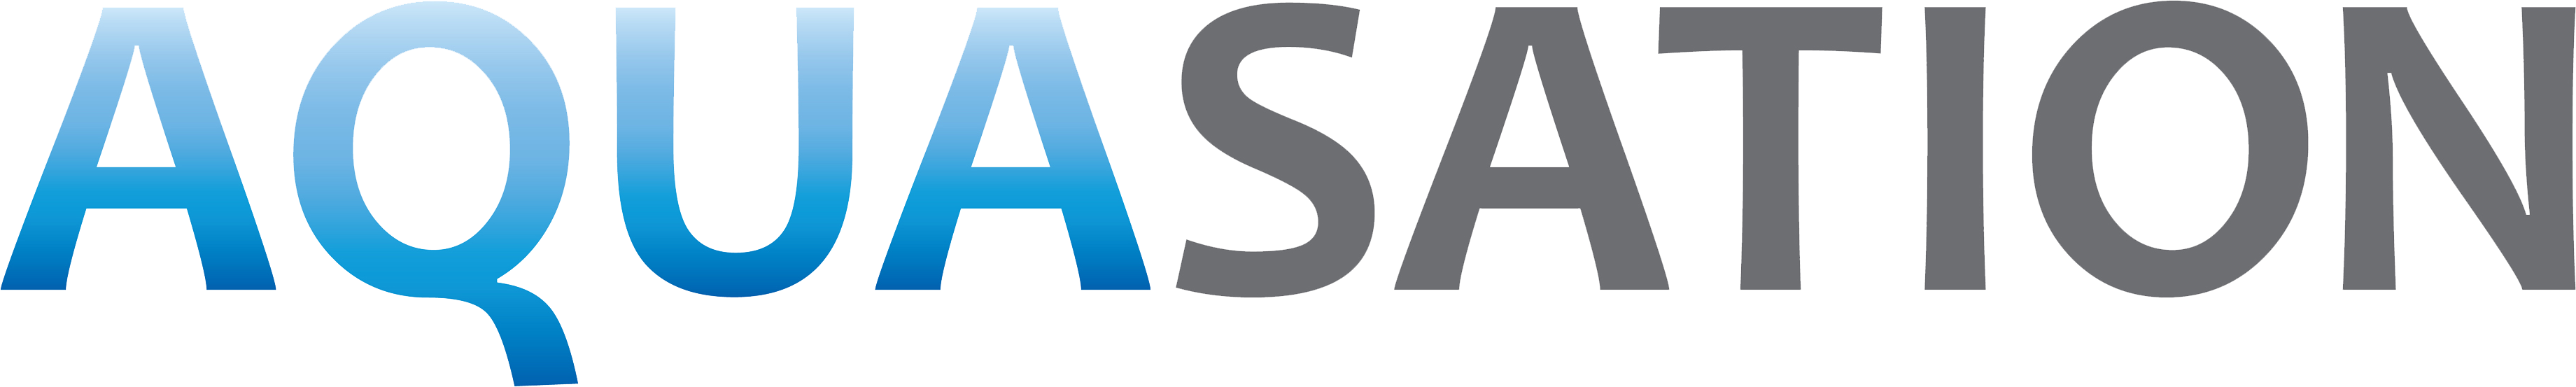 Aquasation Logo